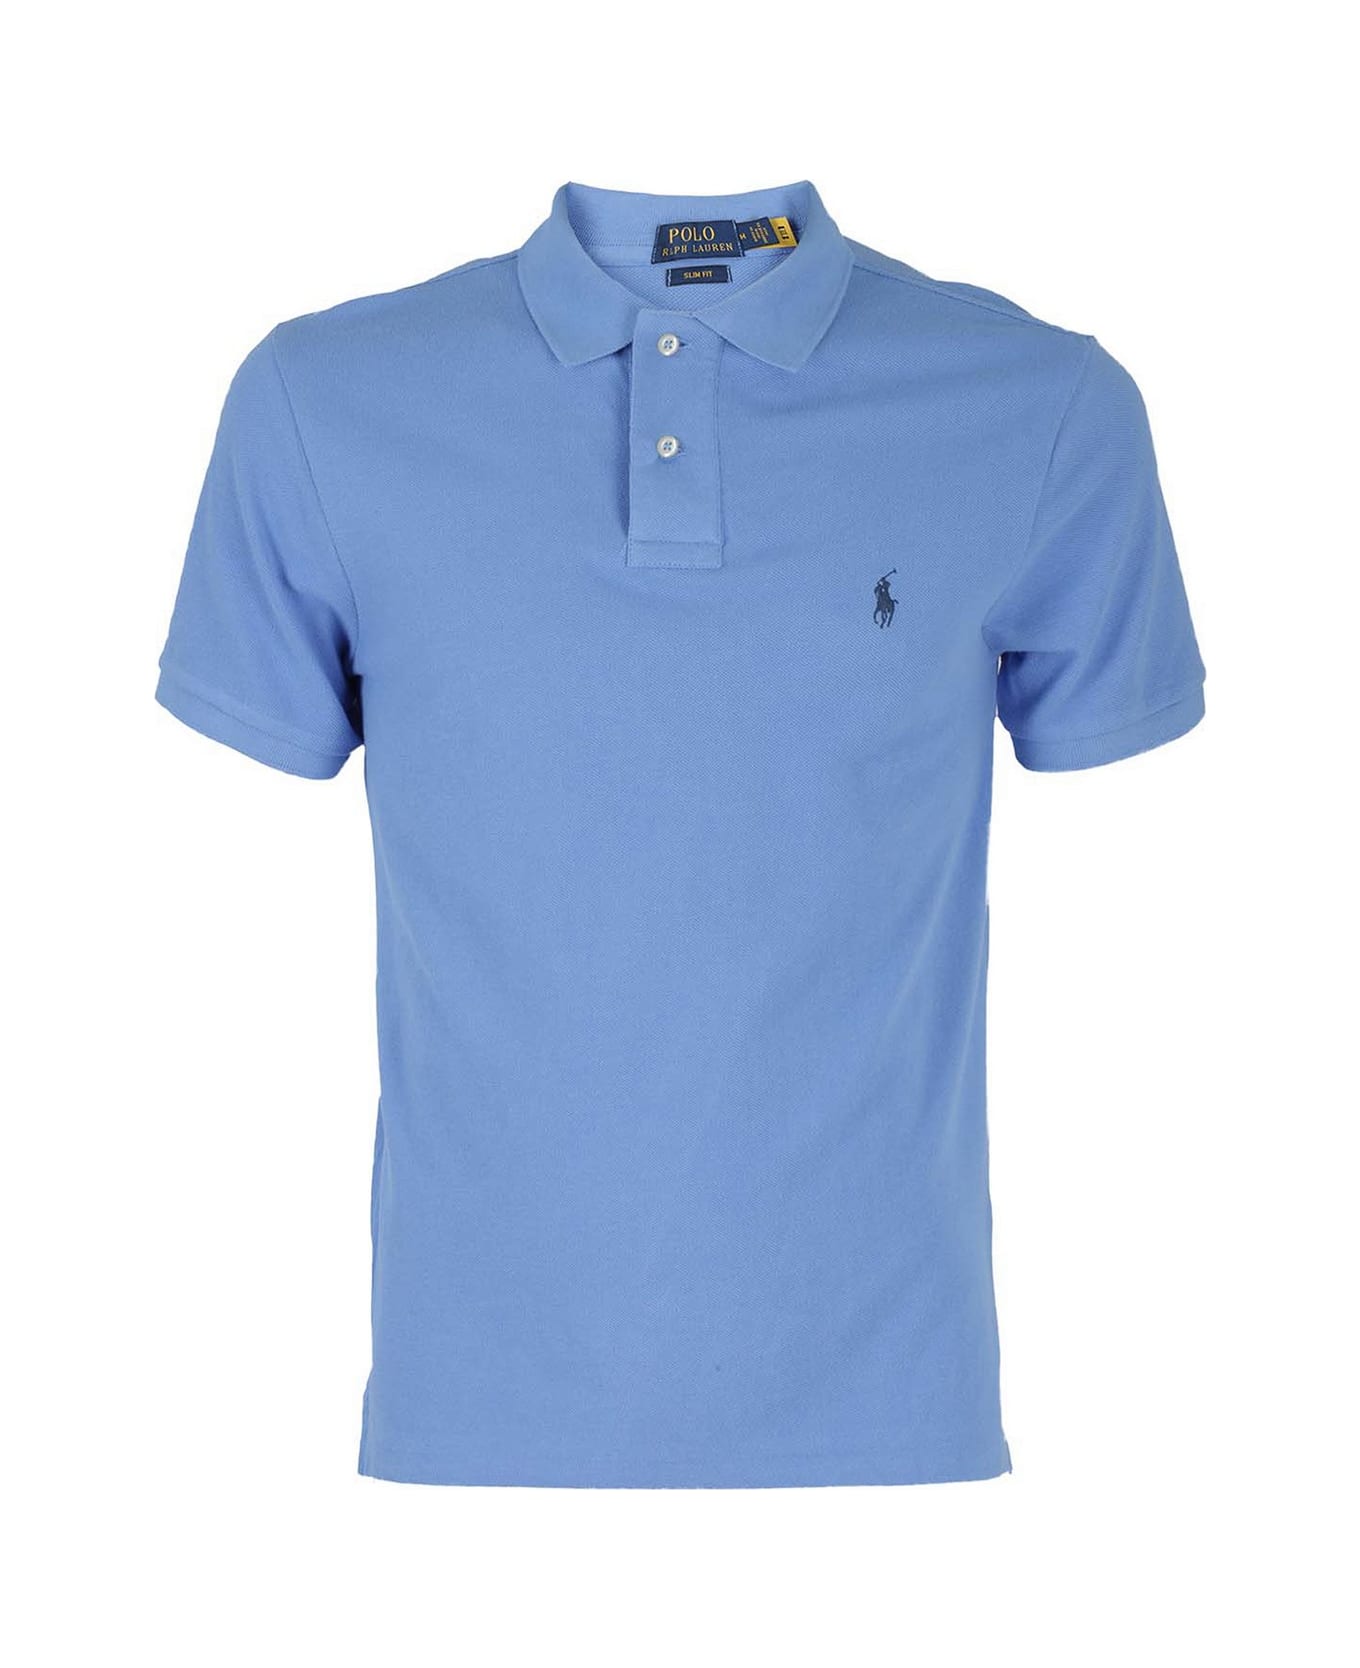 Polo Ralph Lauren Light Blue And Blue Slim-fit Pique Polo Shirt - Blue